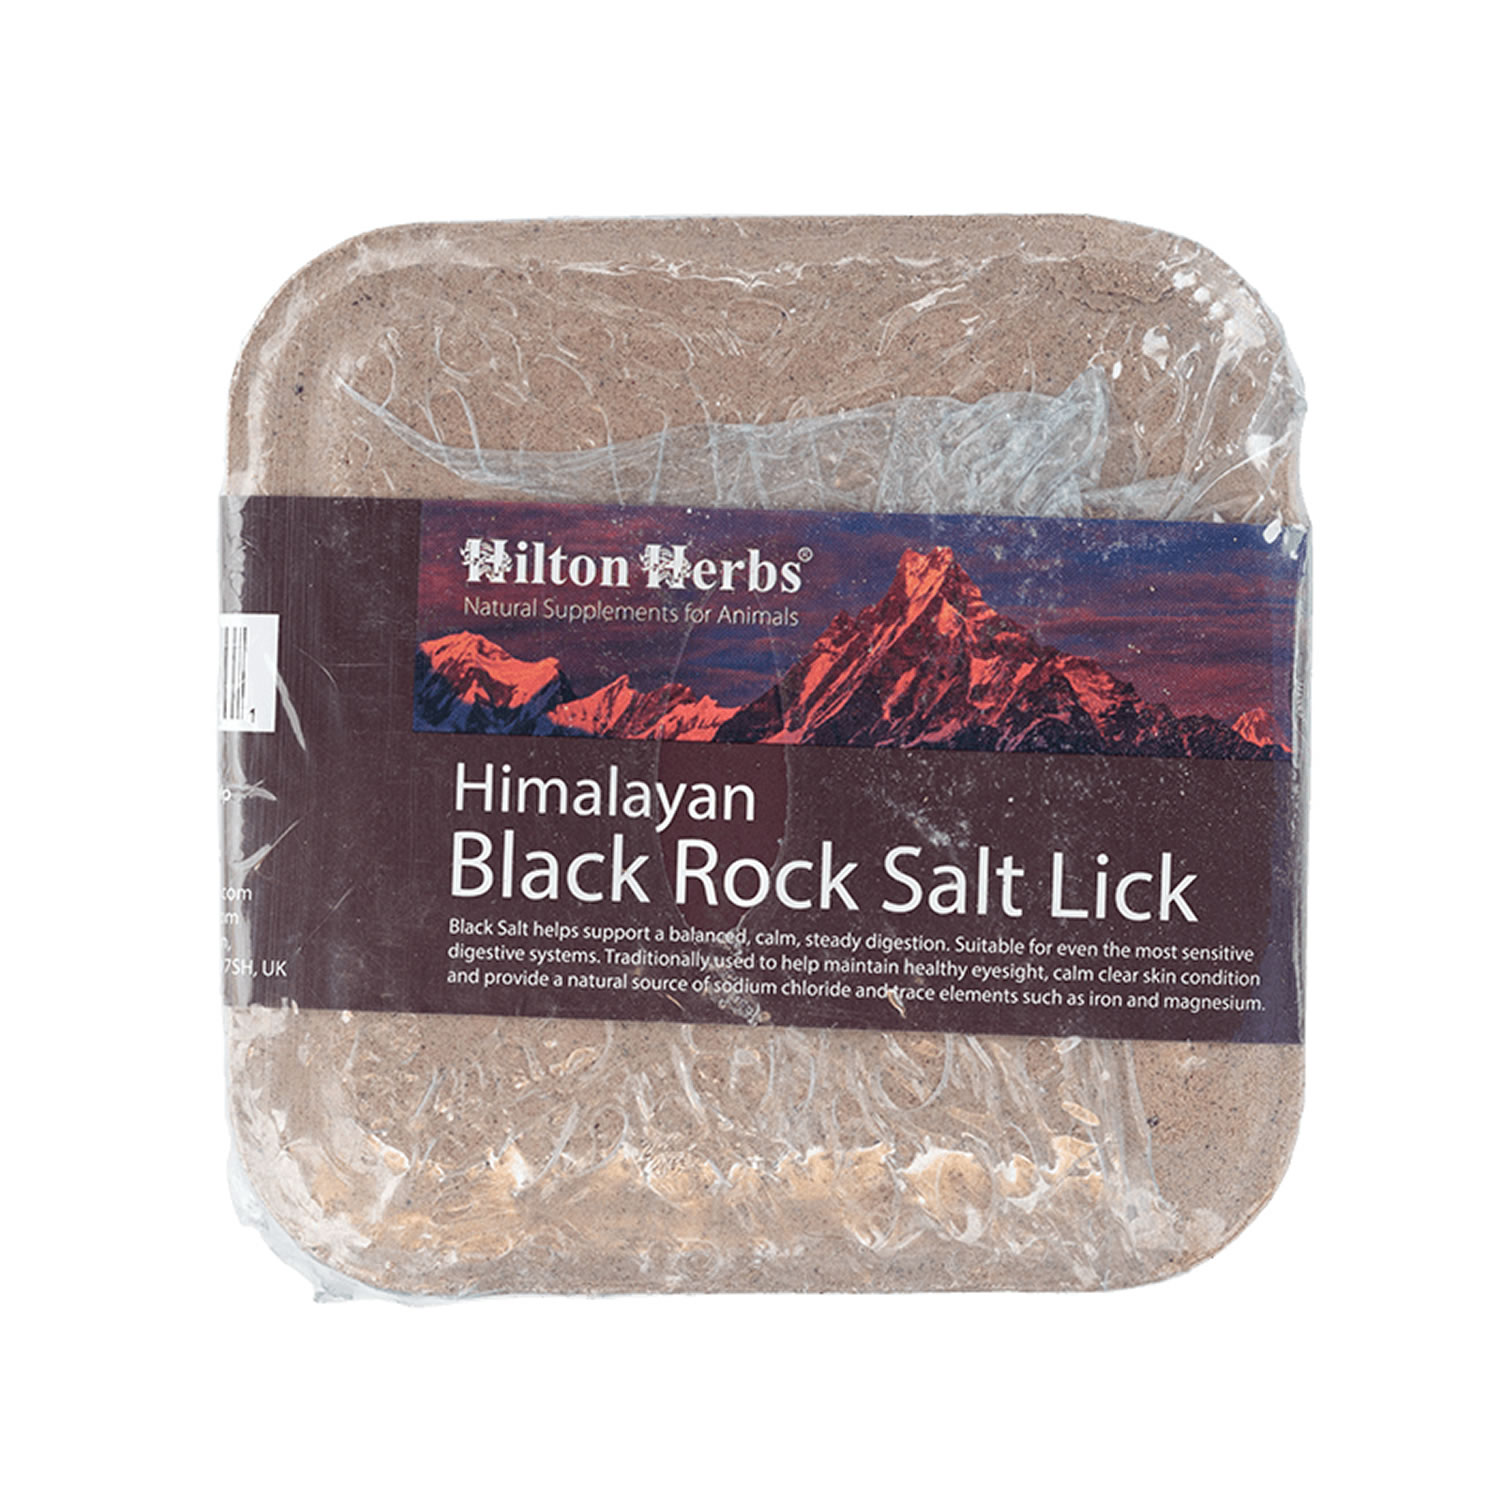 HILTON HERBS HIMALAYAN BLACK ROCK SALT LICK 1 KG 1 KG